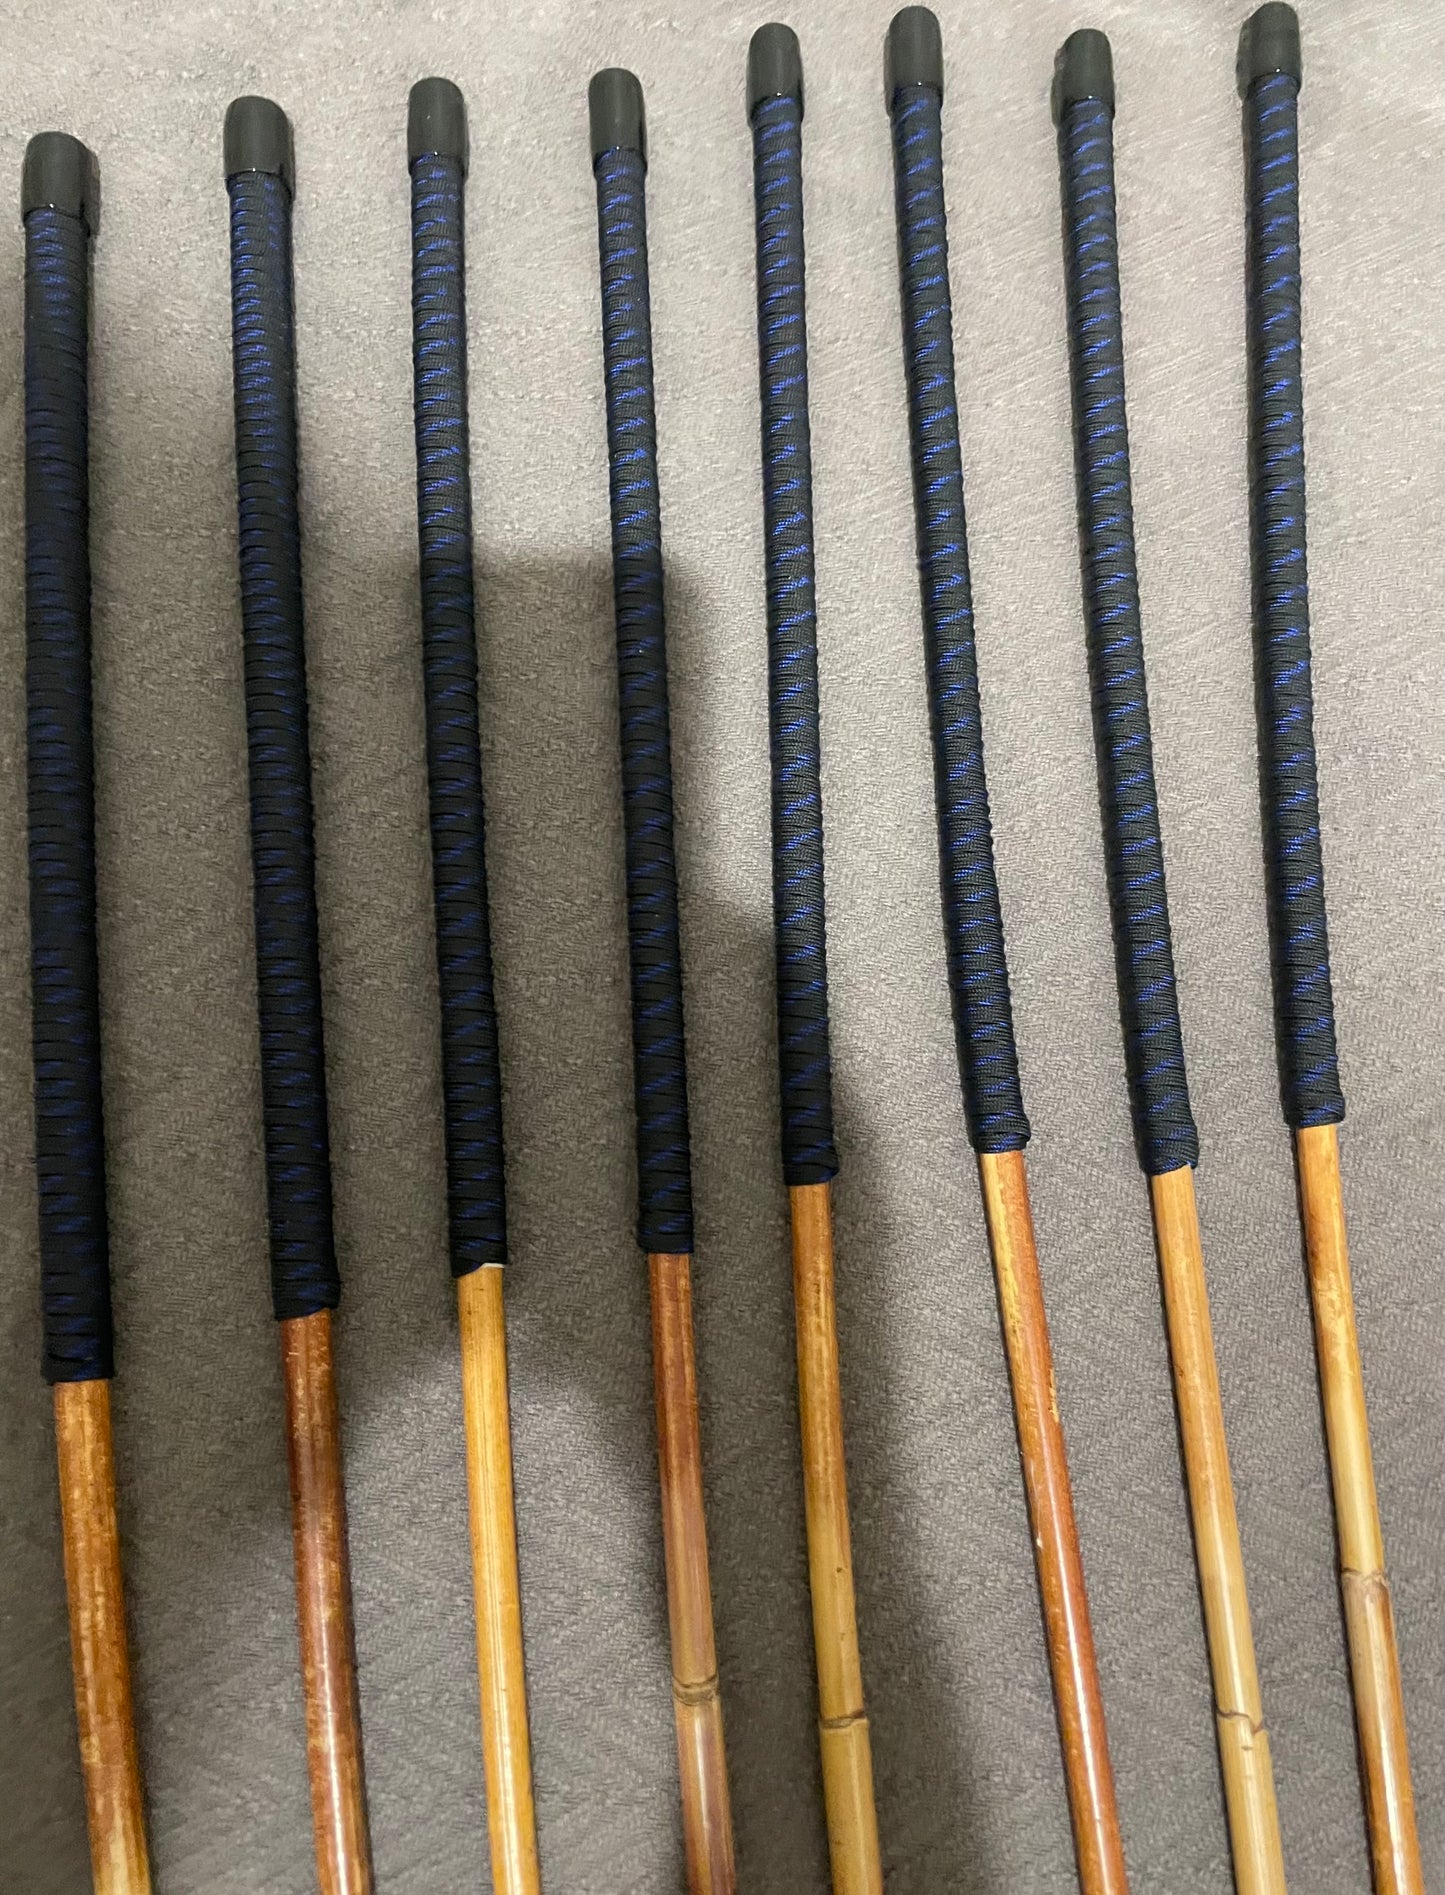 Set of 8 Dragon Rattan Punishment Canes / BDSM Canes with Blue Streak Paracord Handles - SALES SPECIAL - 90 cms Length - Englishvice Canes 